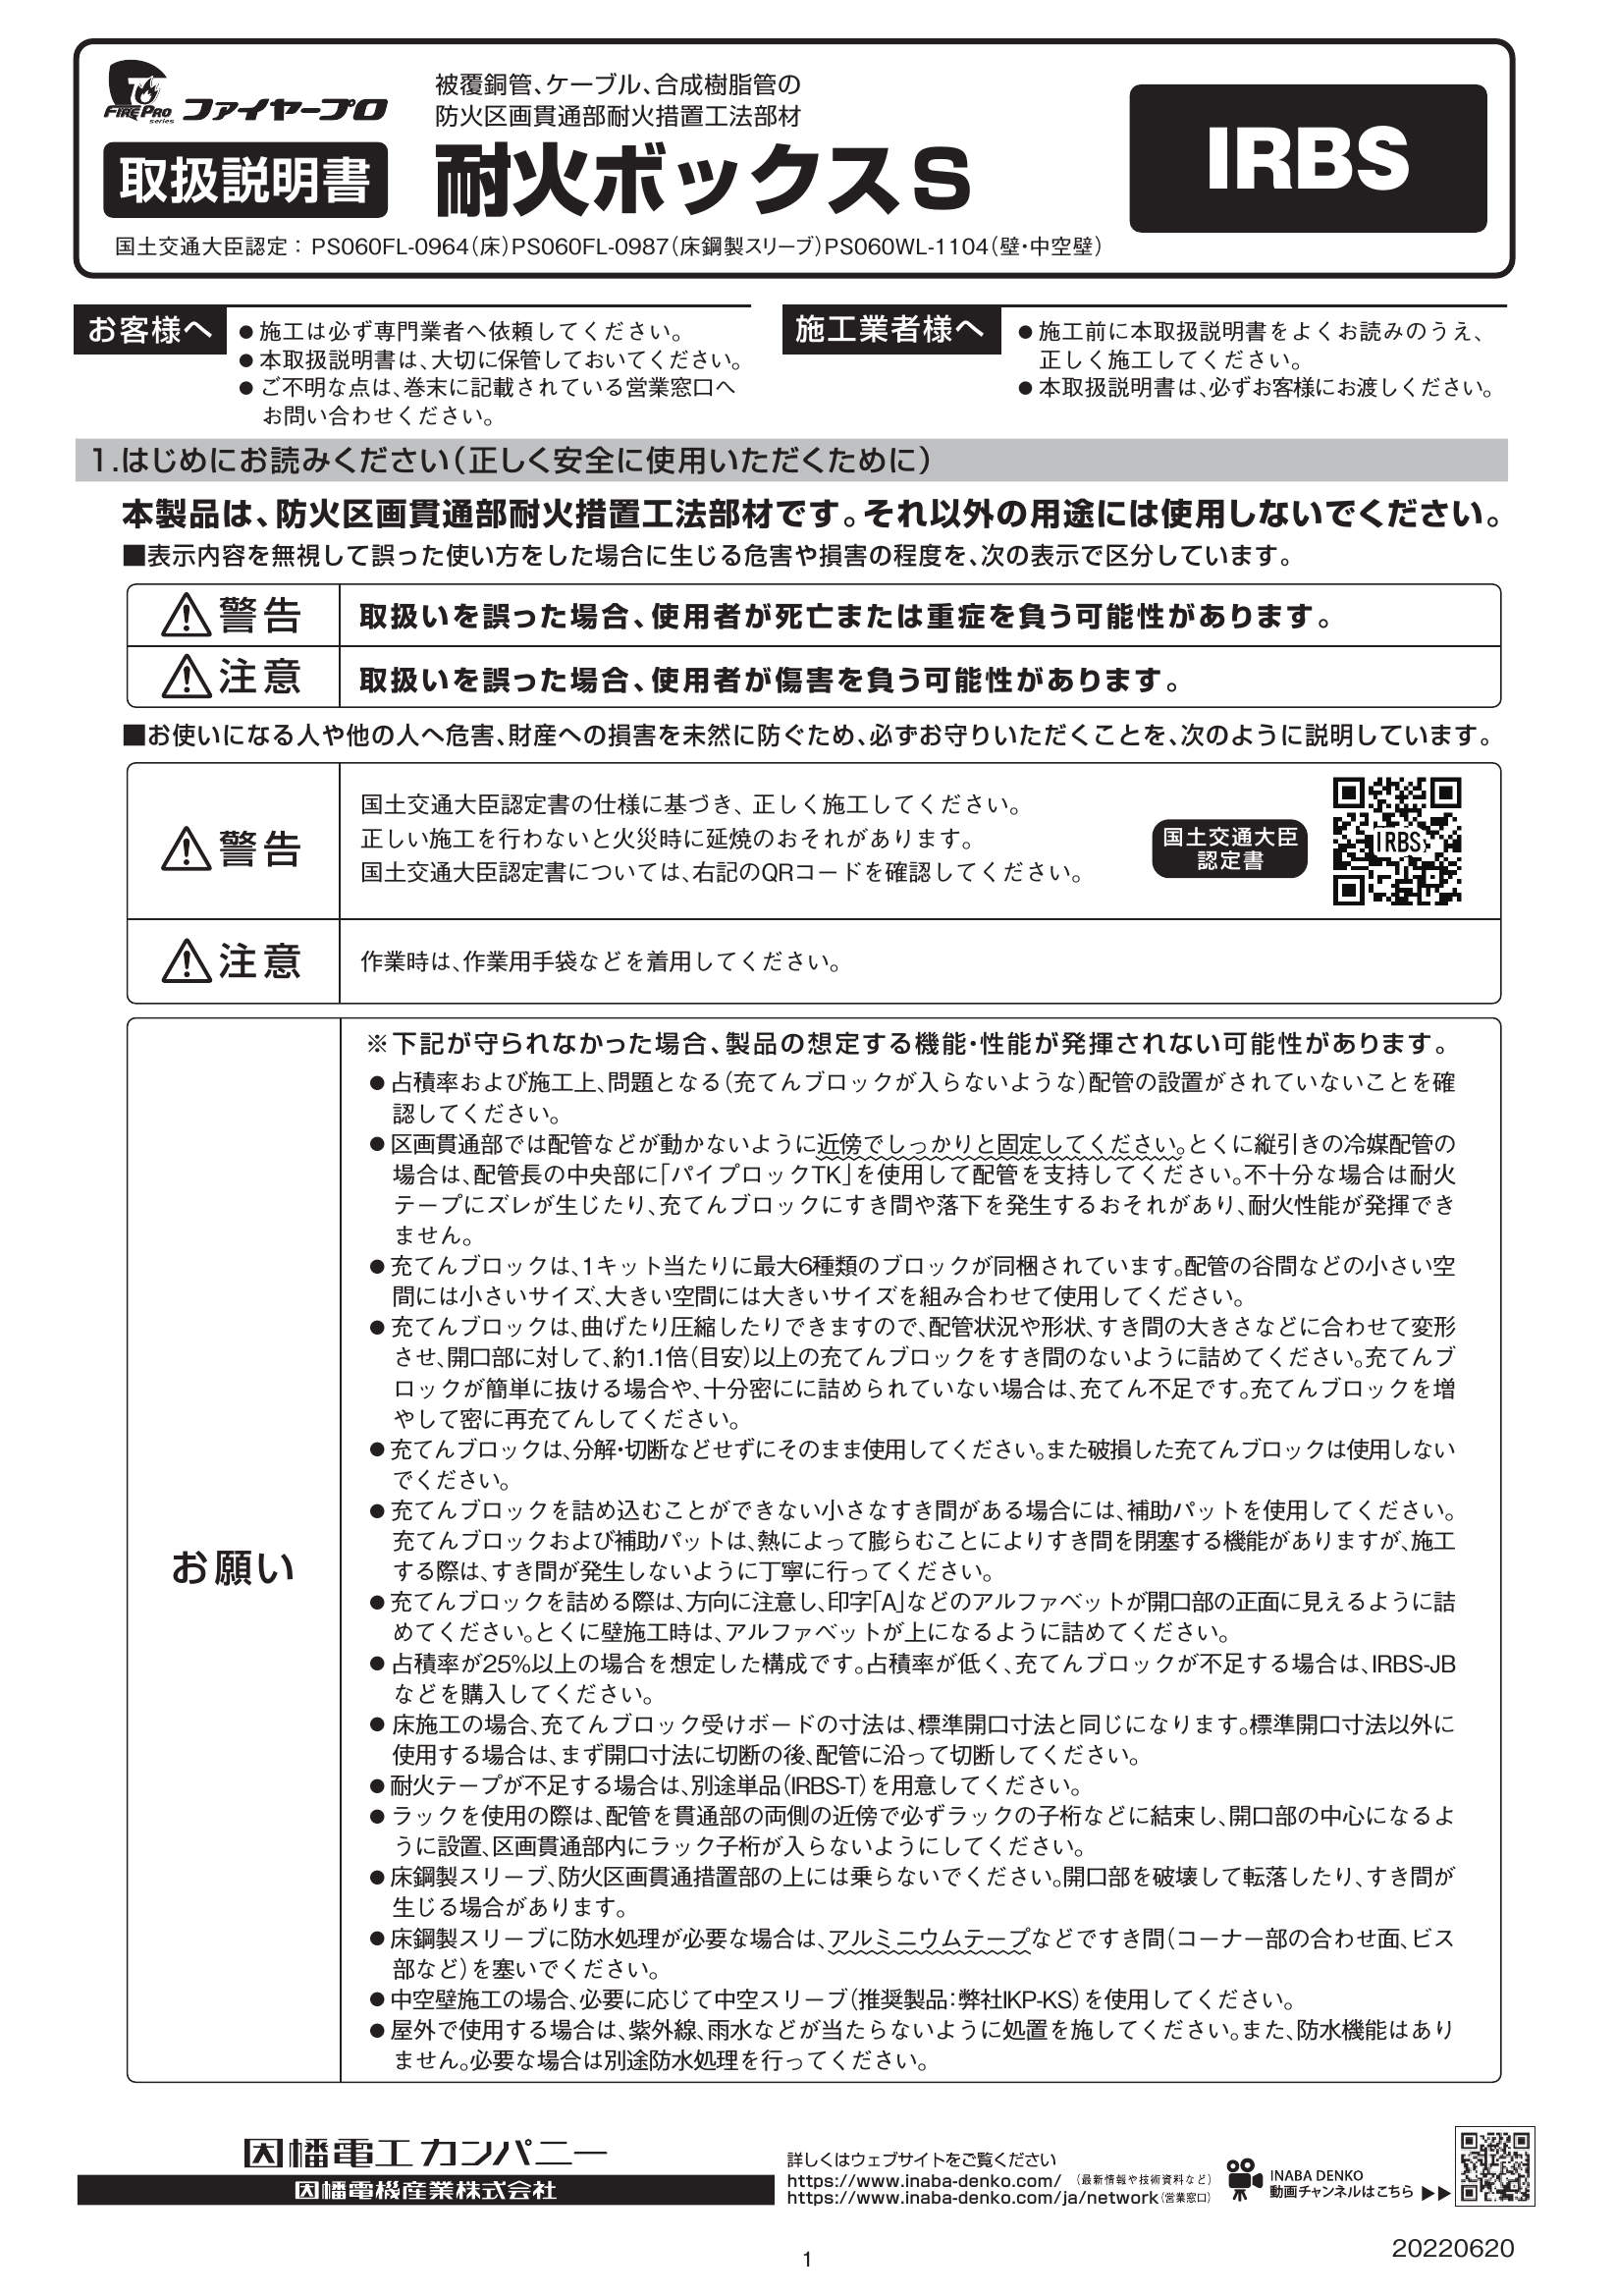 IRBS_取扱説明書_20220620-00w.pdf